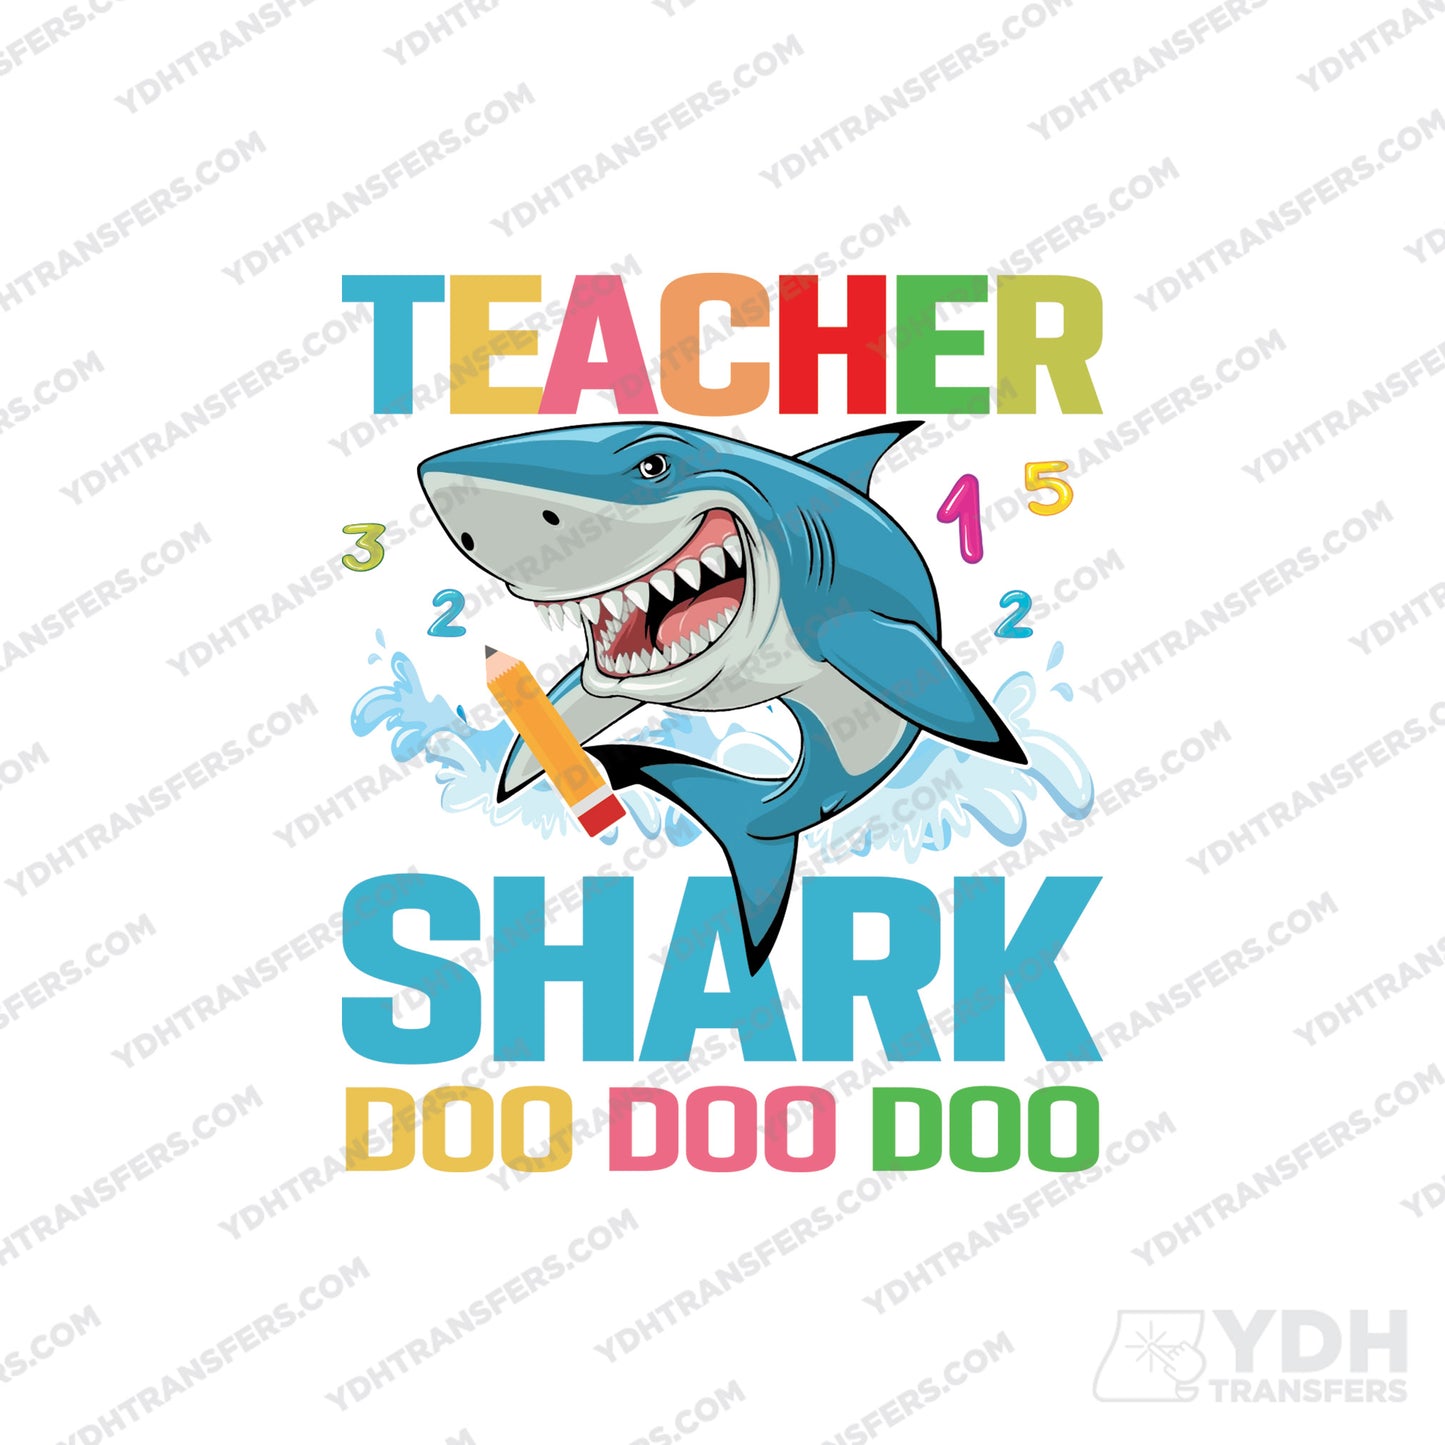 Teacher Shark doo doo doo Full Color Transfer